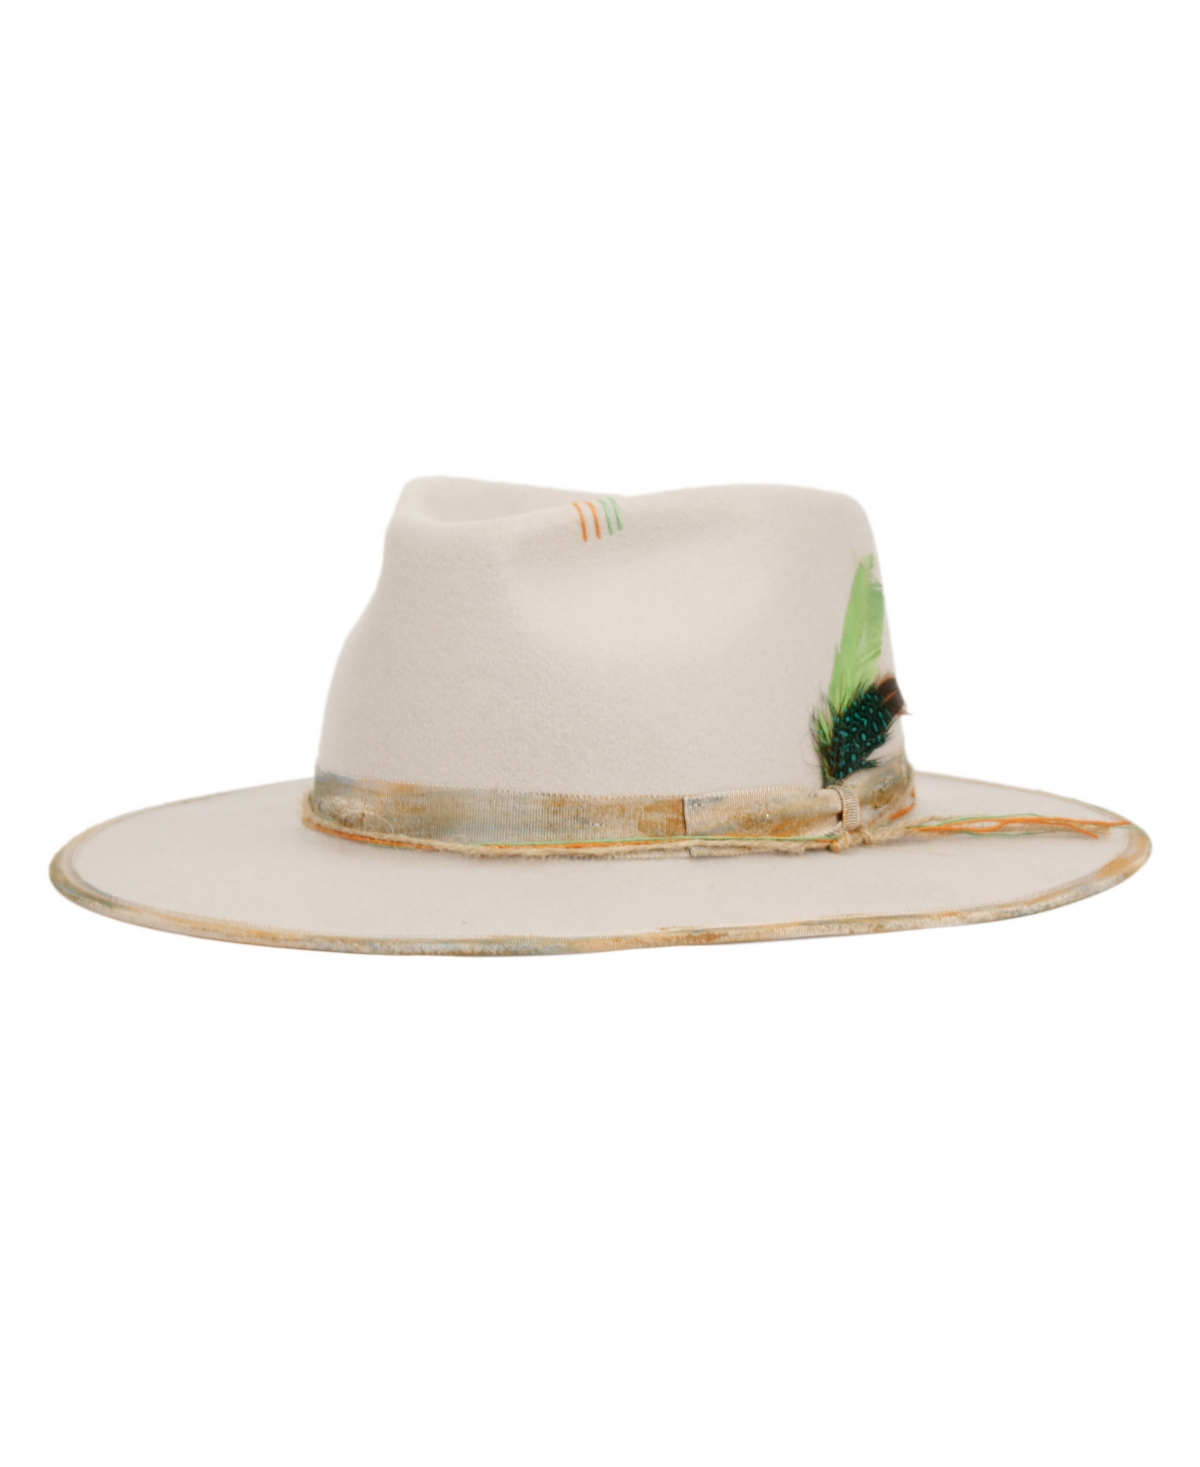 Vintage-Like Flat Brim Felt Fedora Ranch Hat - Lt Gray